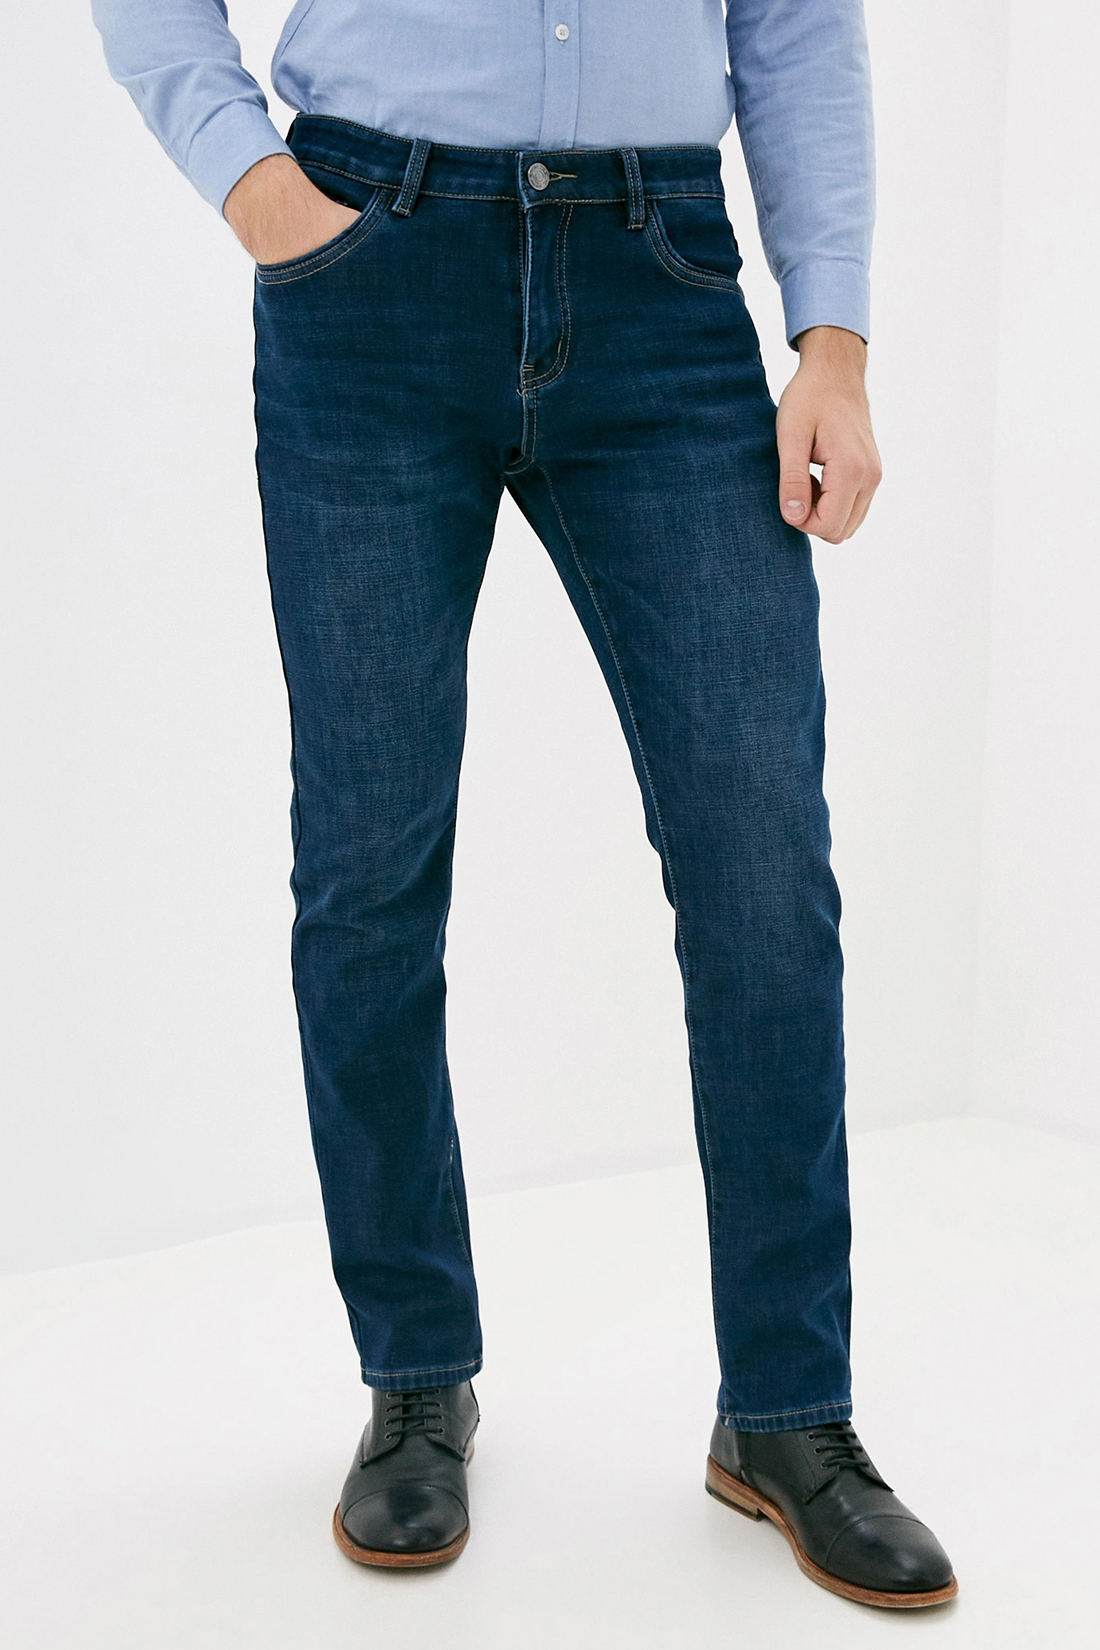 Утеплённые джинсы (арт. baon B800506), размер 33, цвет dark blue denim#синий